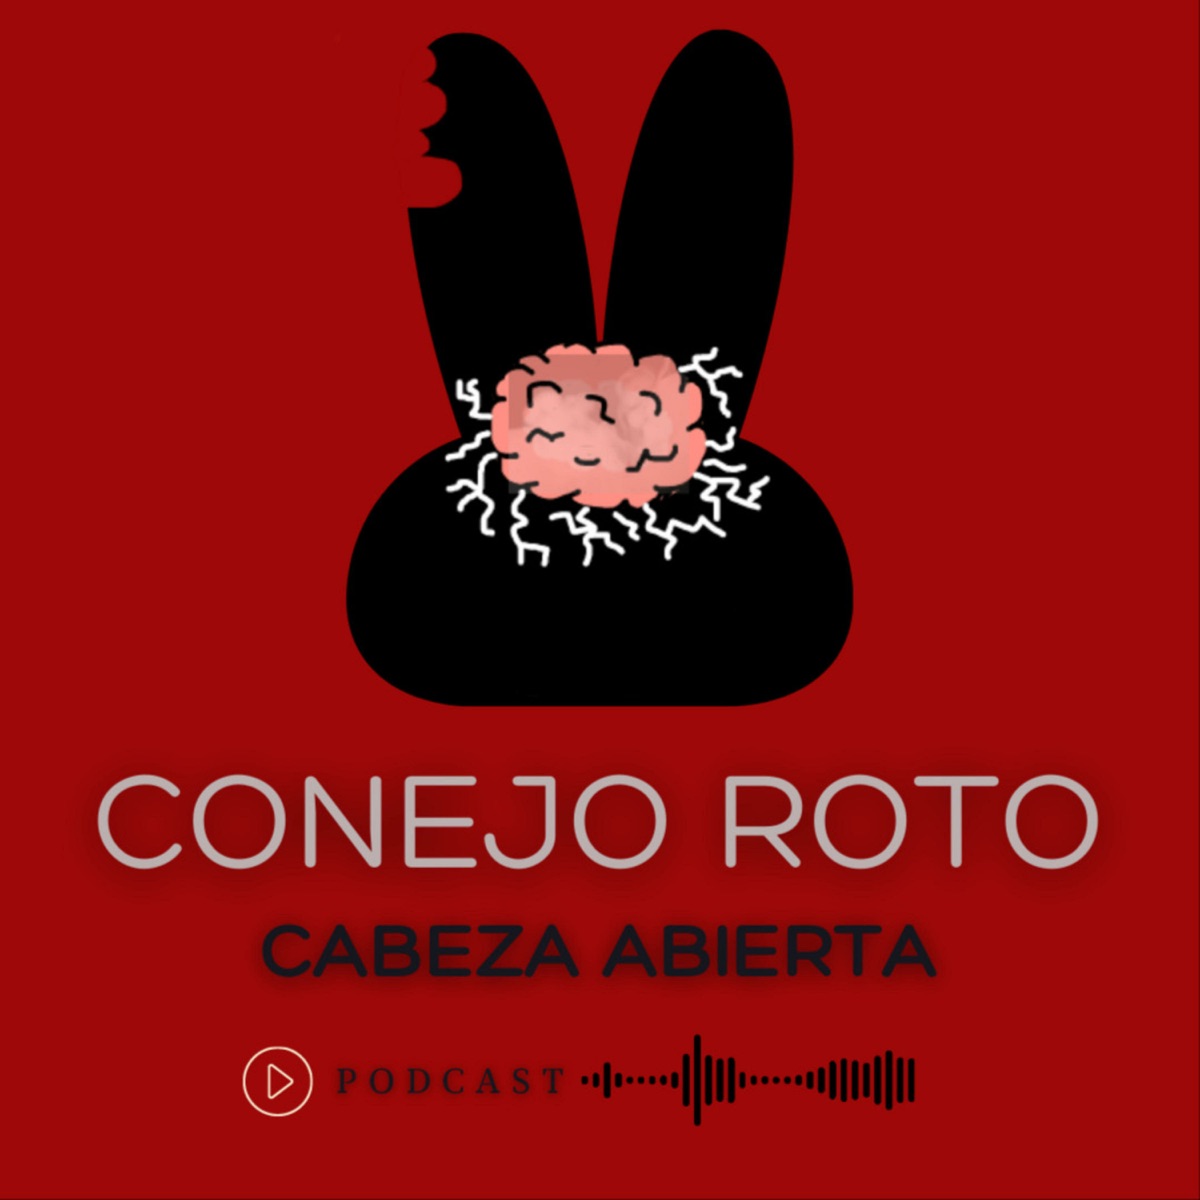 Conejo Roto Cabeza Abierta – Podcast